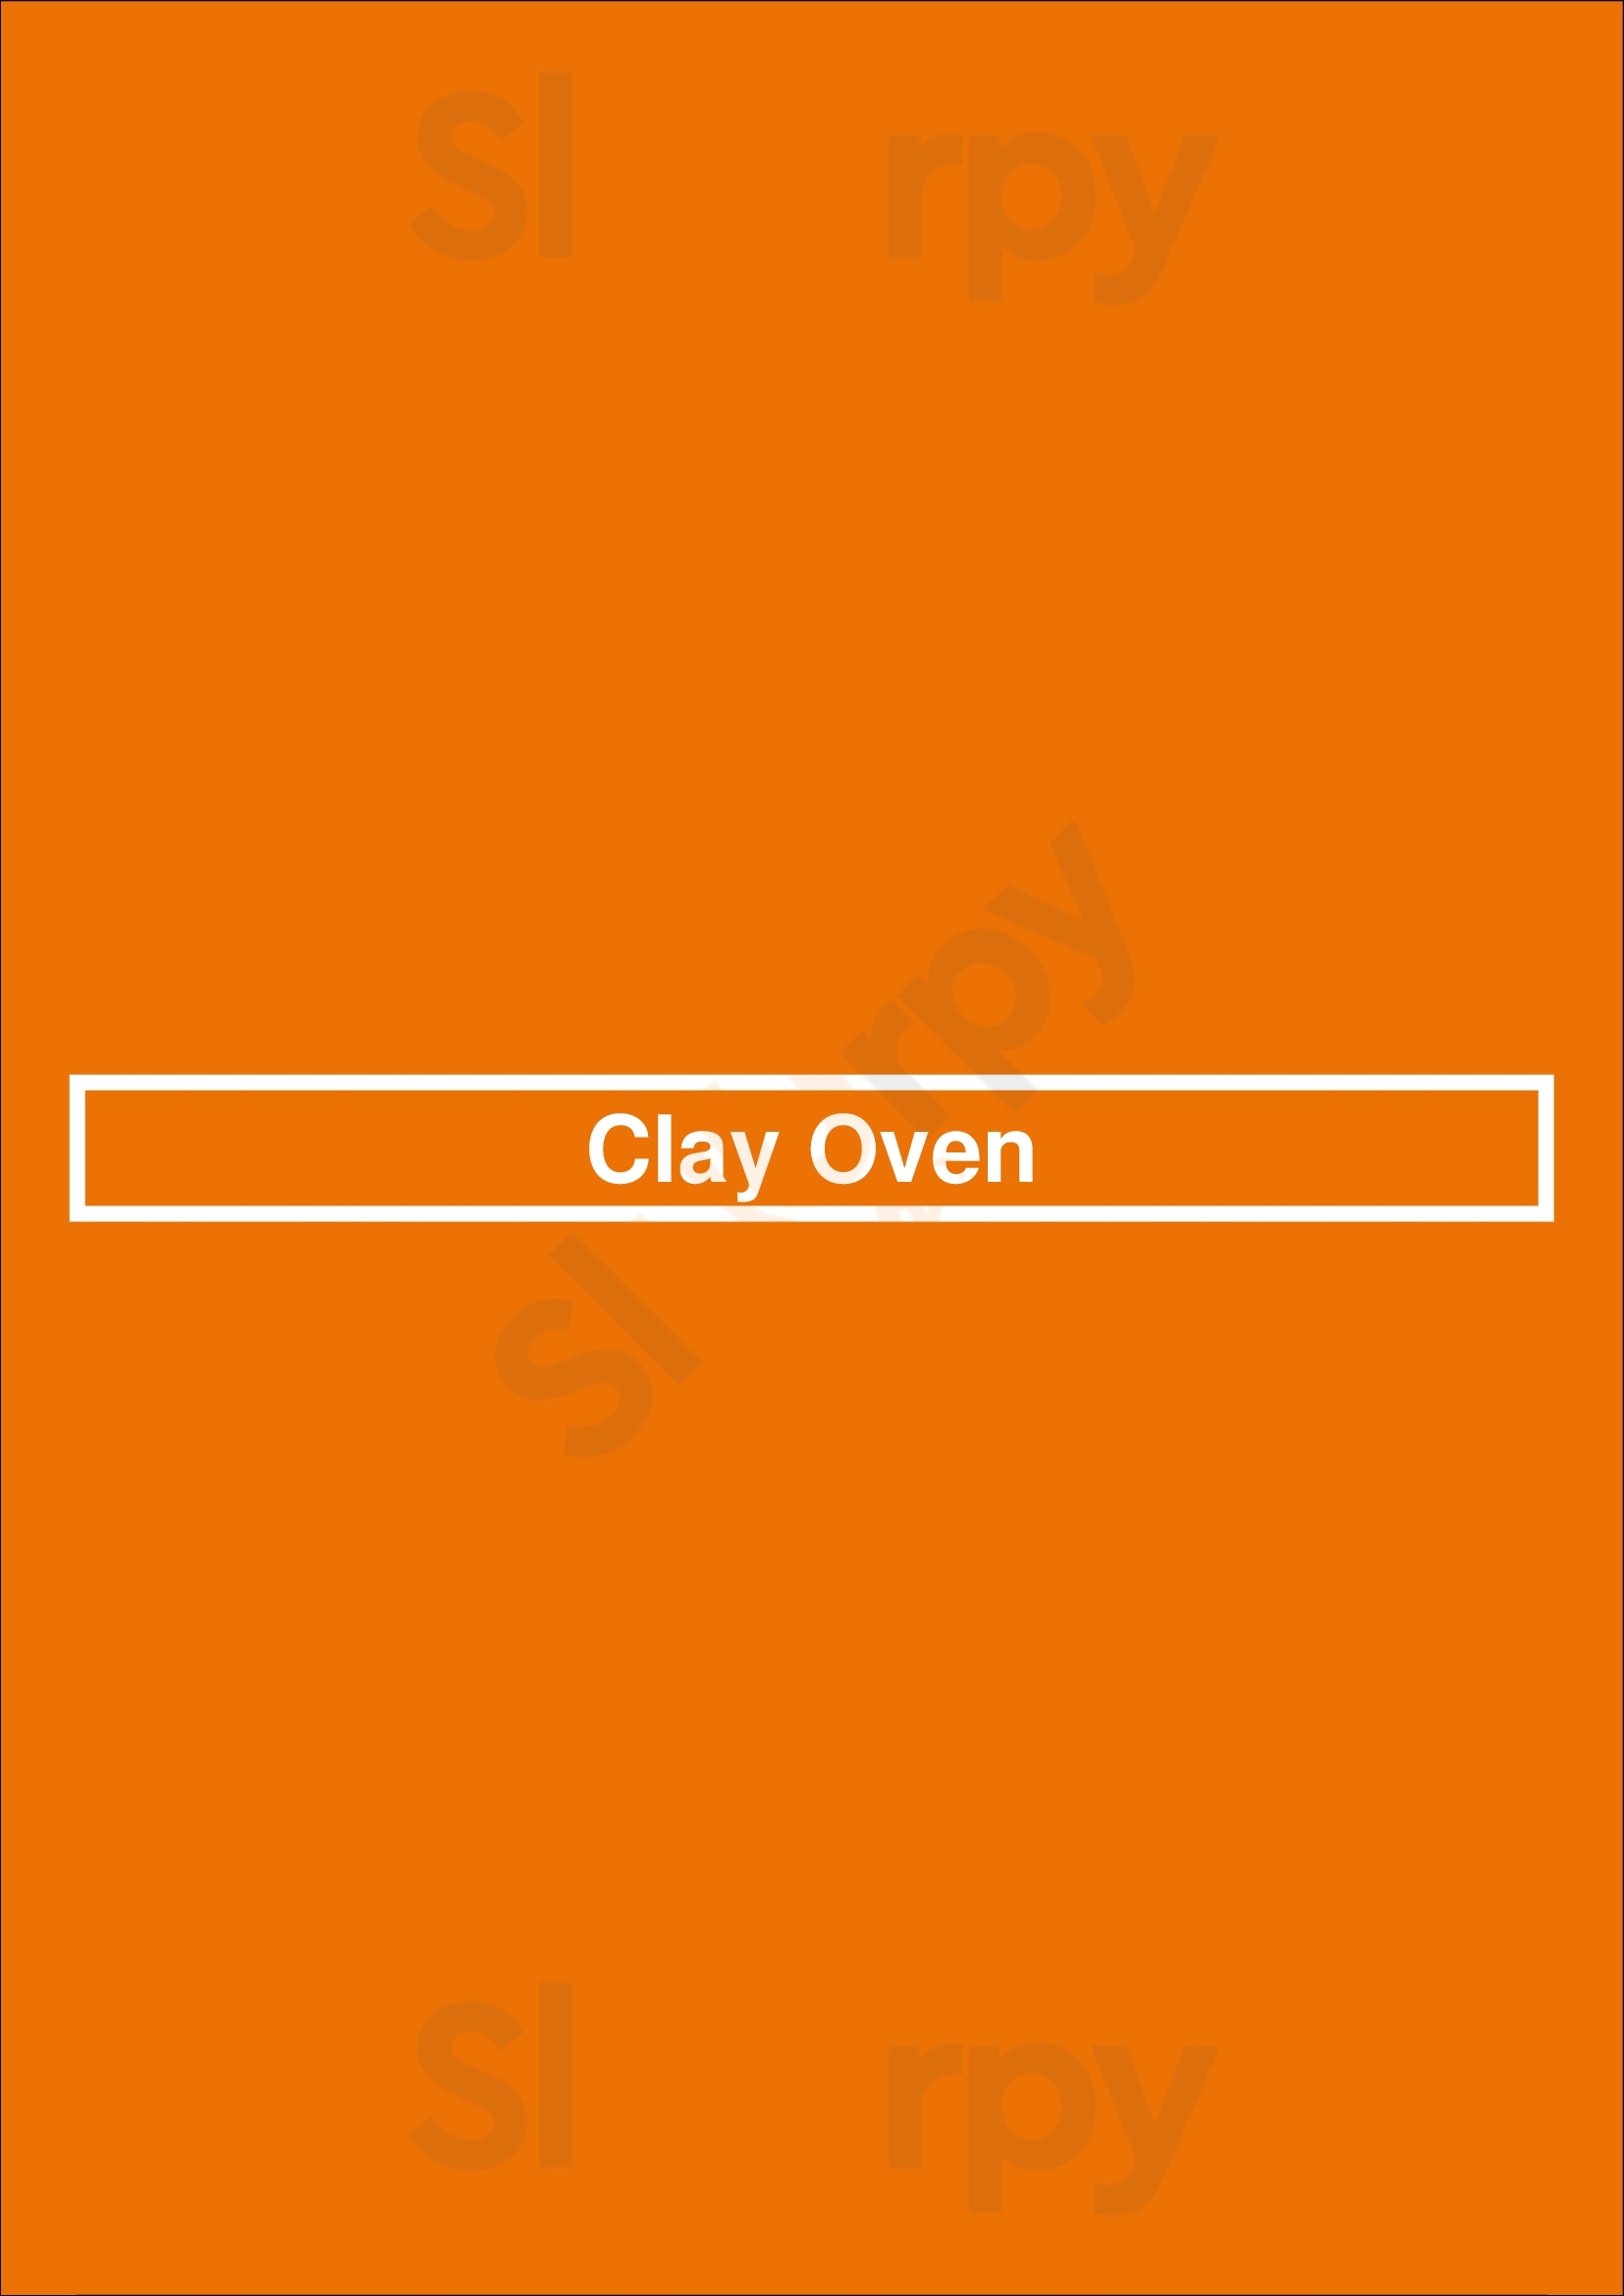 Clay Oven Winnipeg Menu - 1